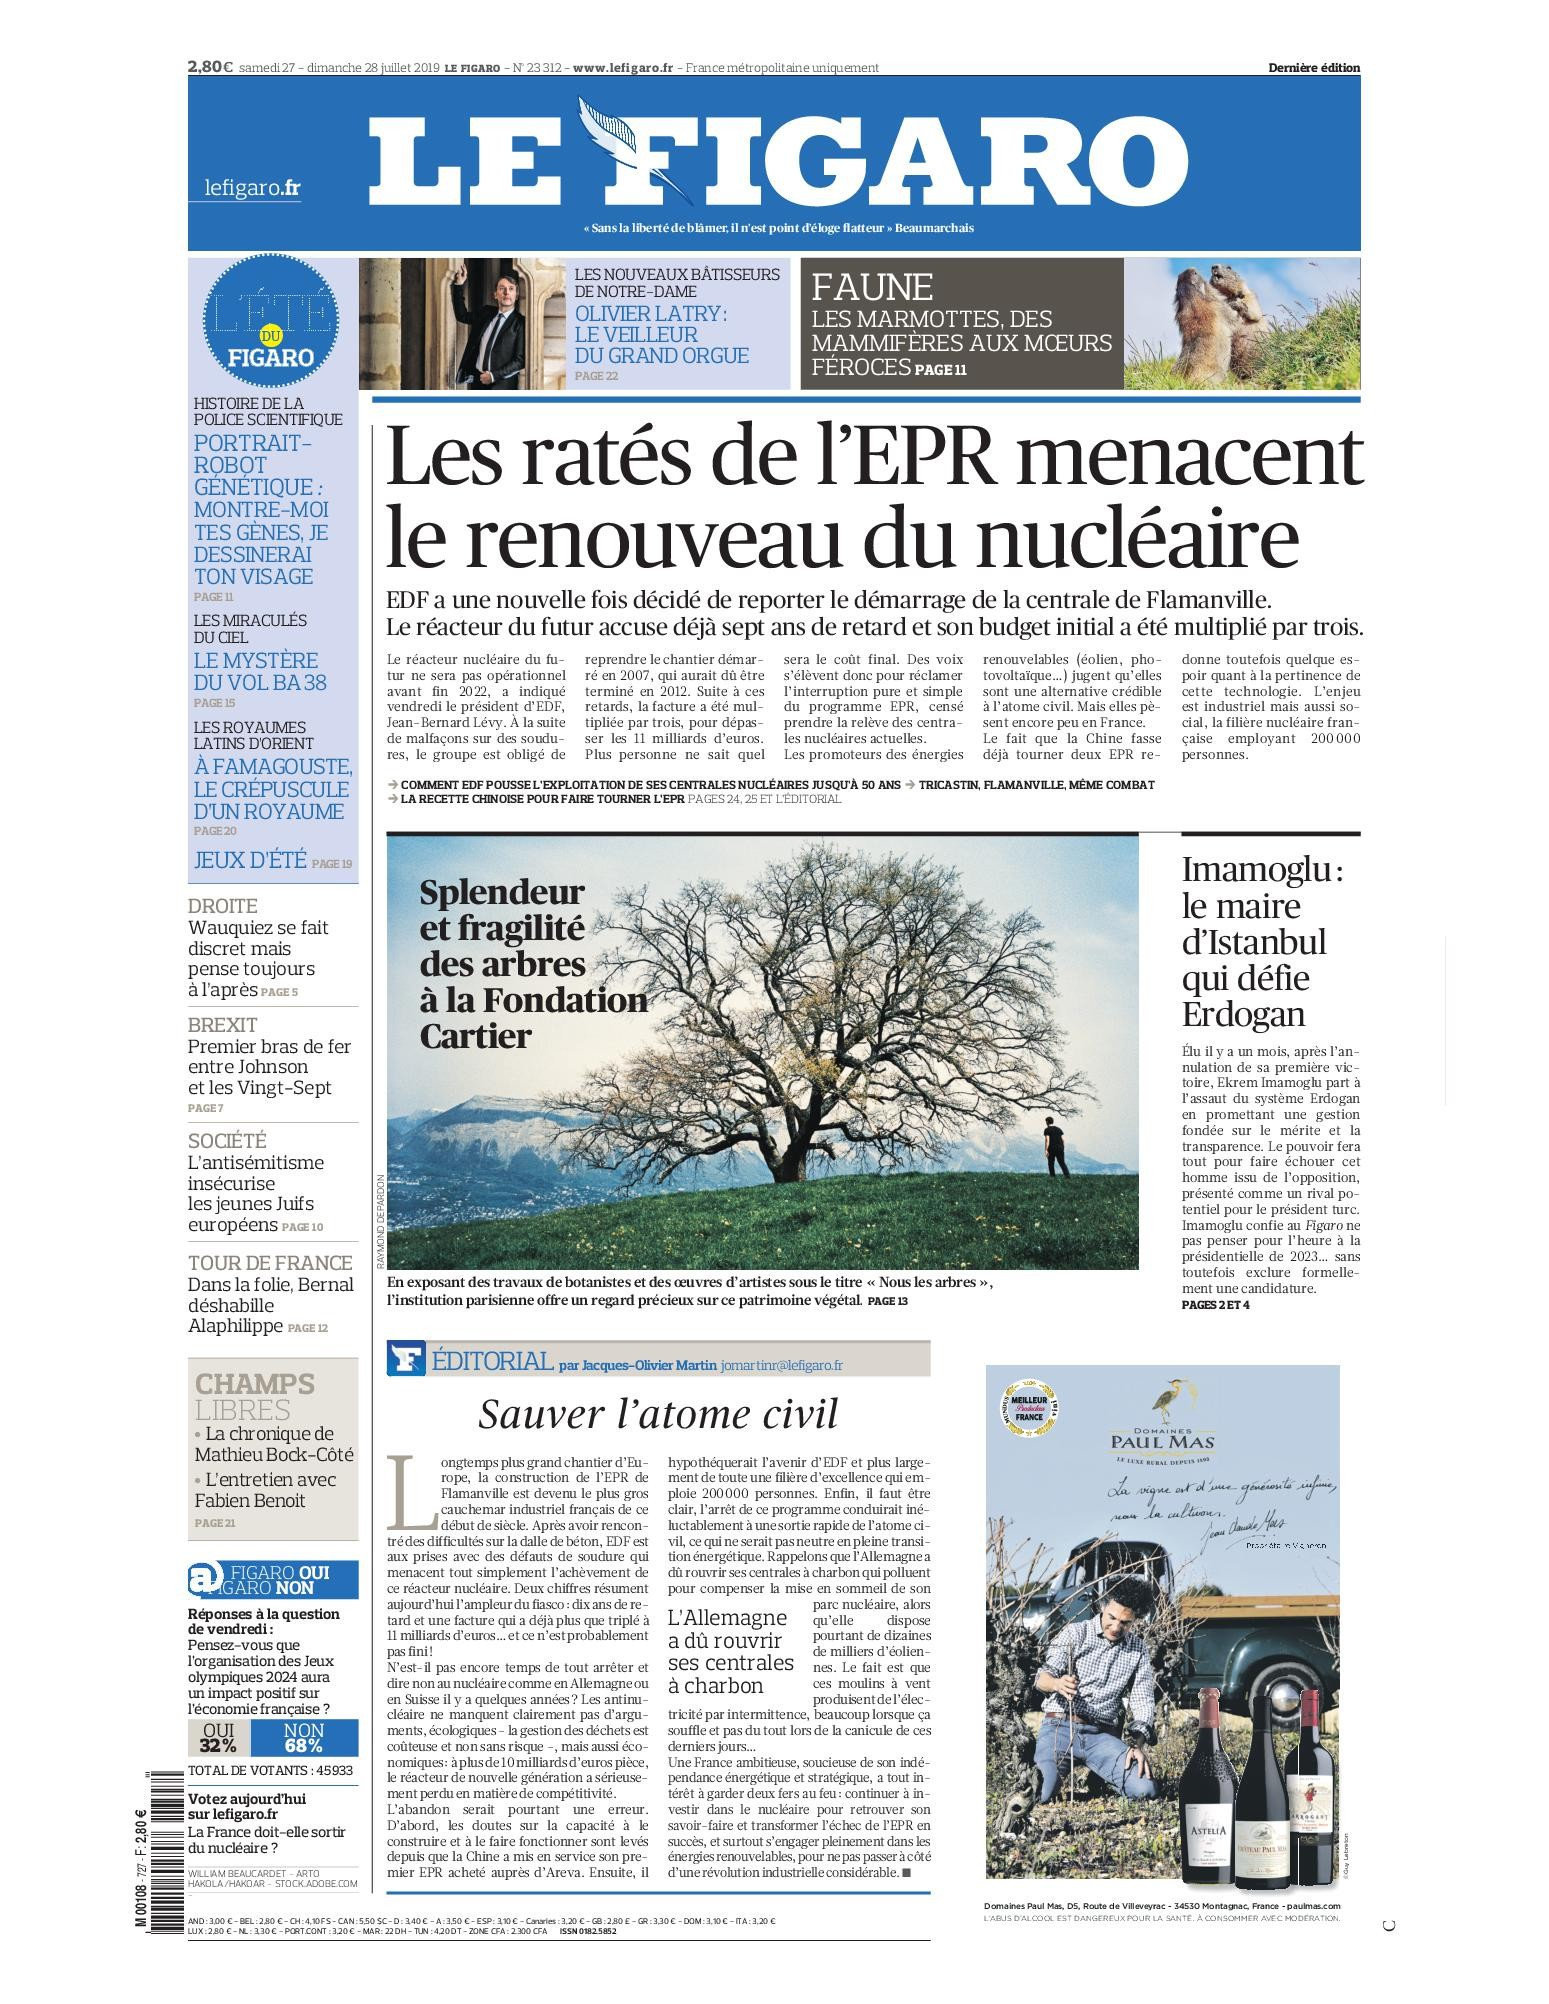 Le Figaro Du Samedi 27 & Dimanche 28 Juillet 2019